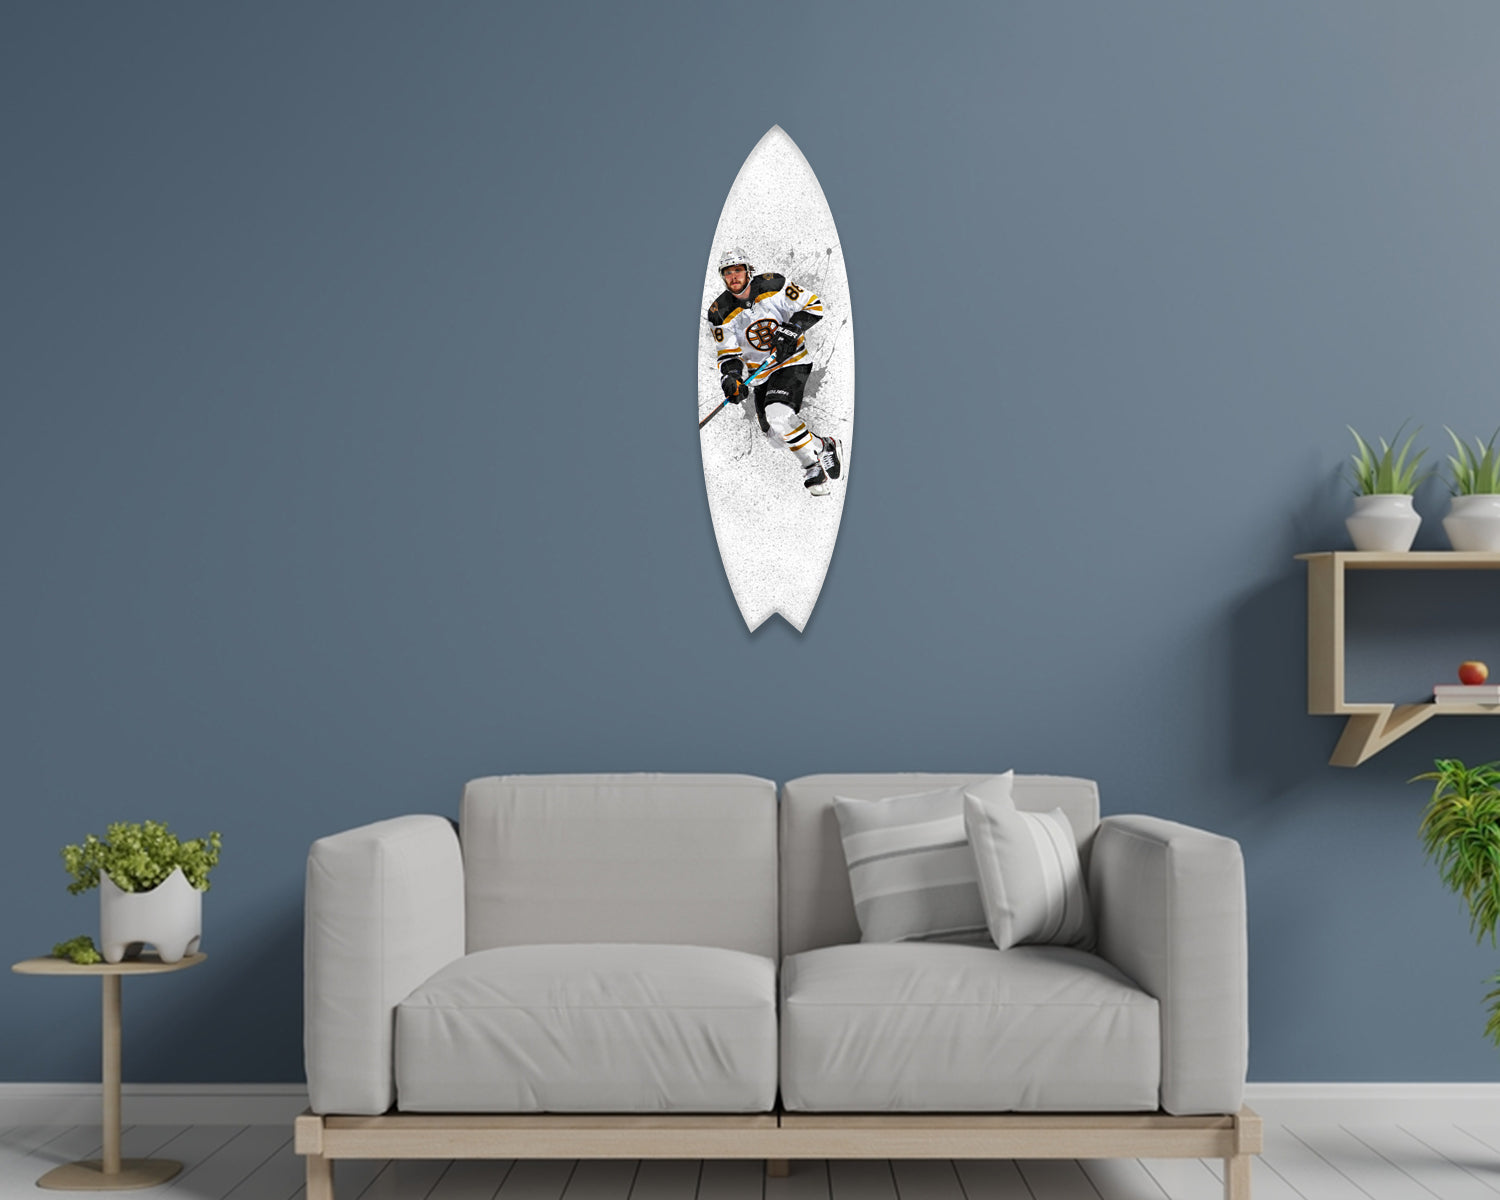 David Pastrnak Acrylic Surfboard Wall Art 